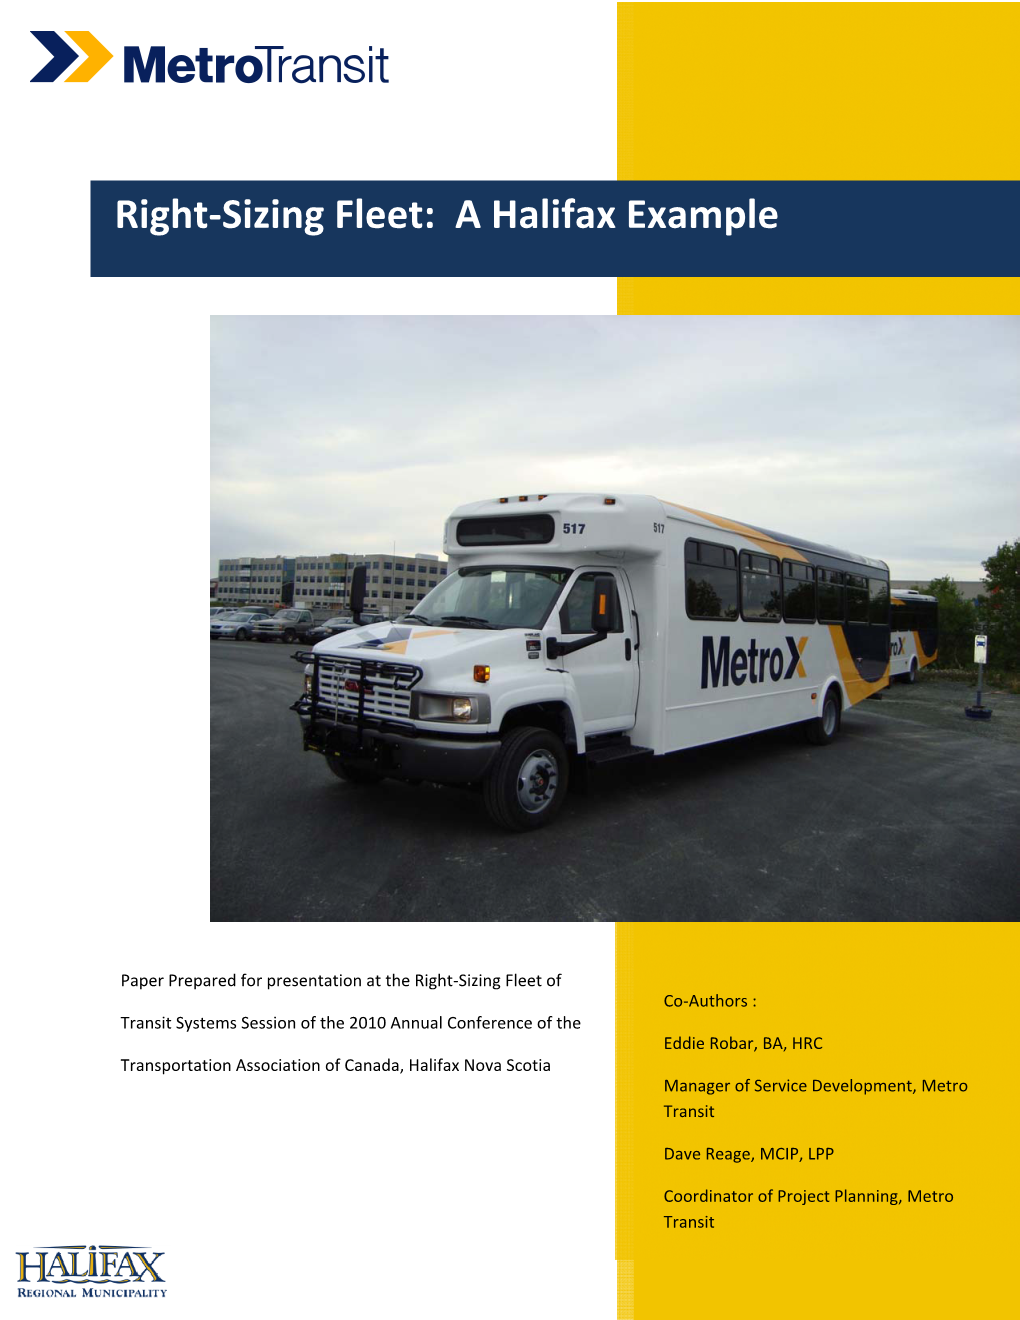 Right-Sizing Fleet: a Halifax Example